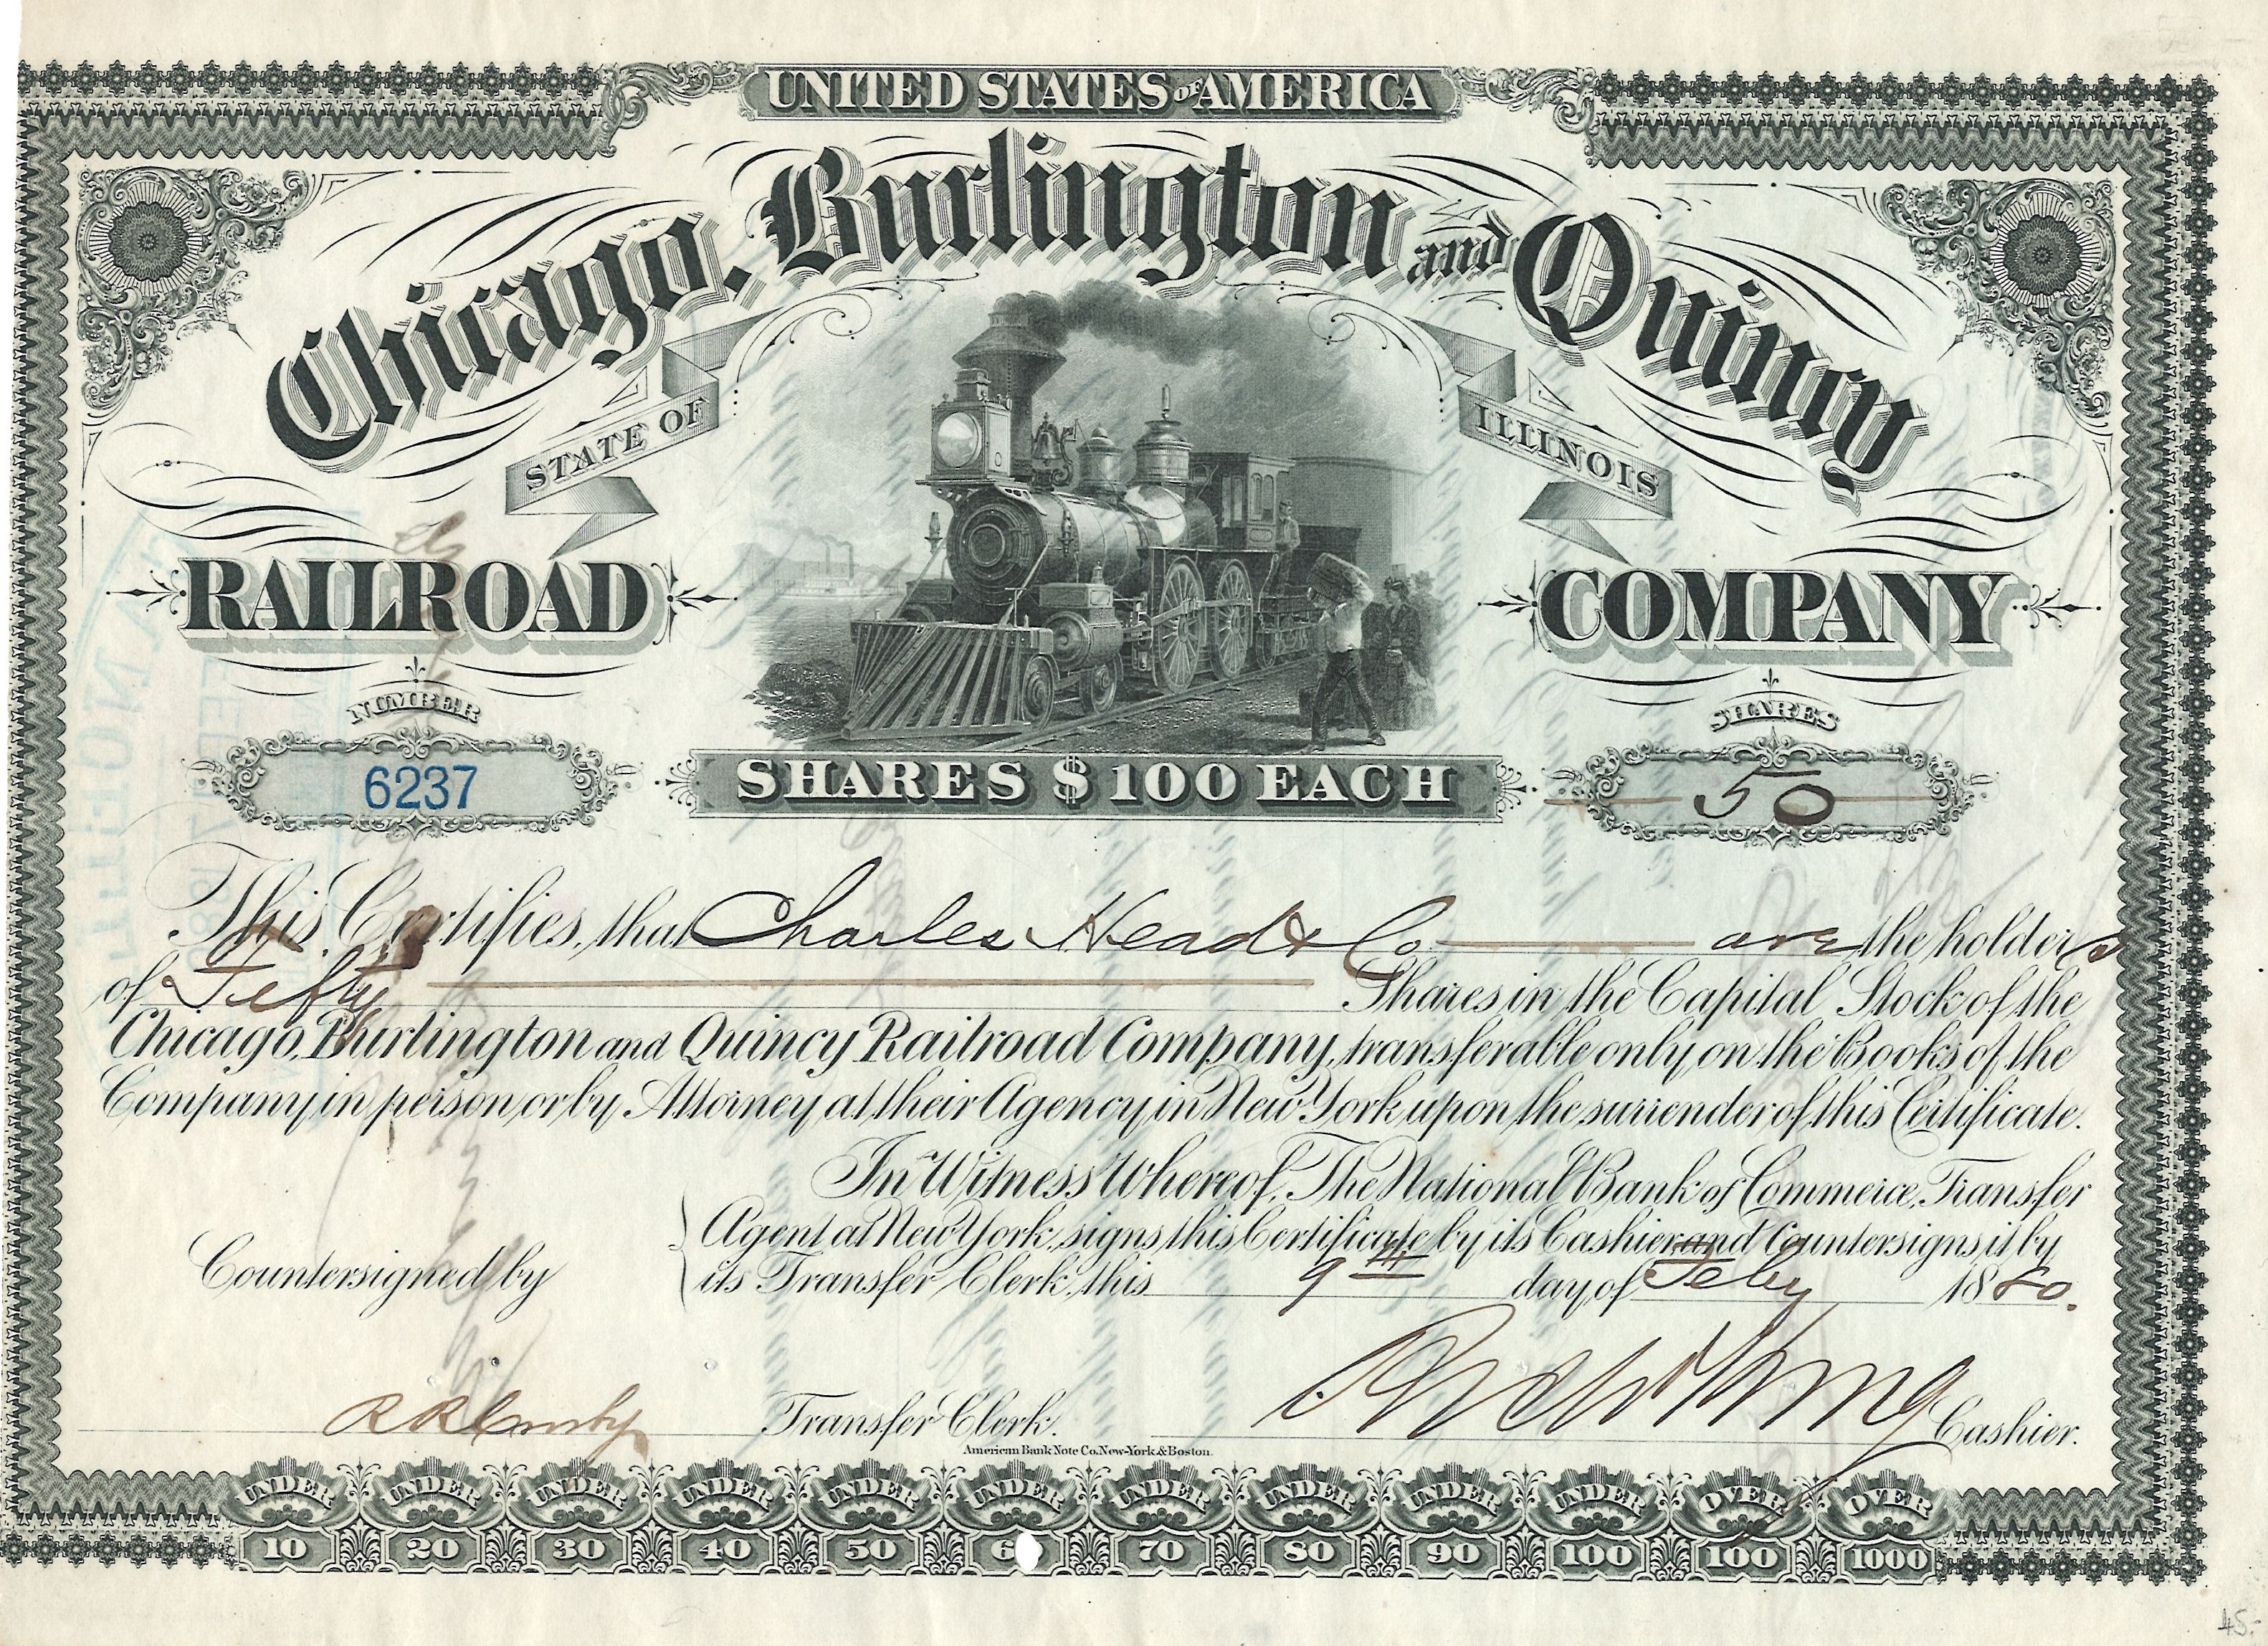 Chicago Burlington and Quincy Railroad Company. 50 Shares